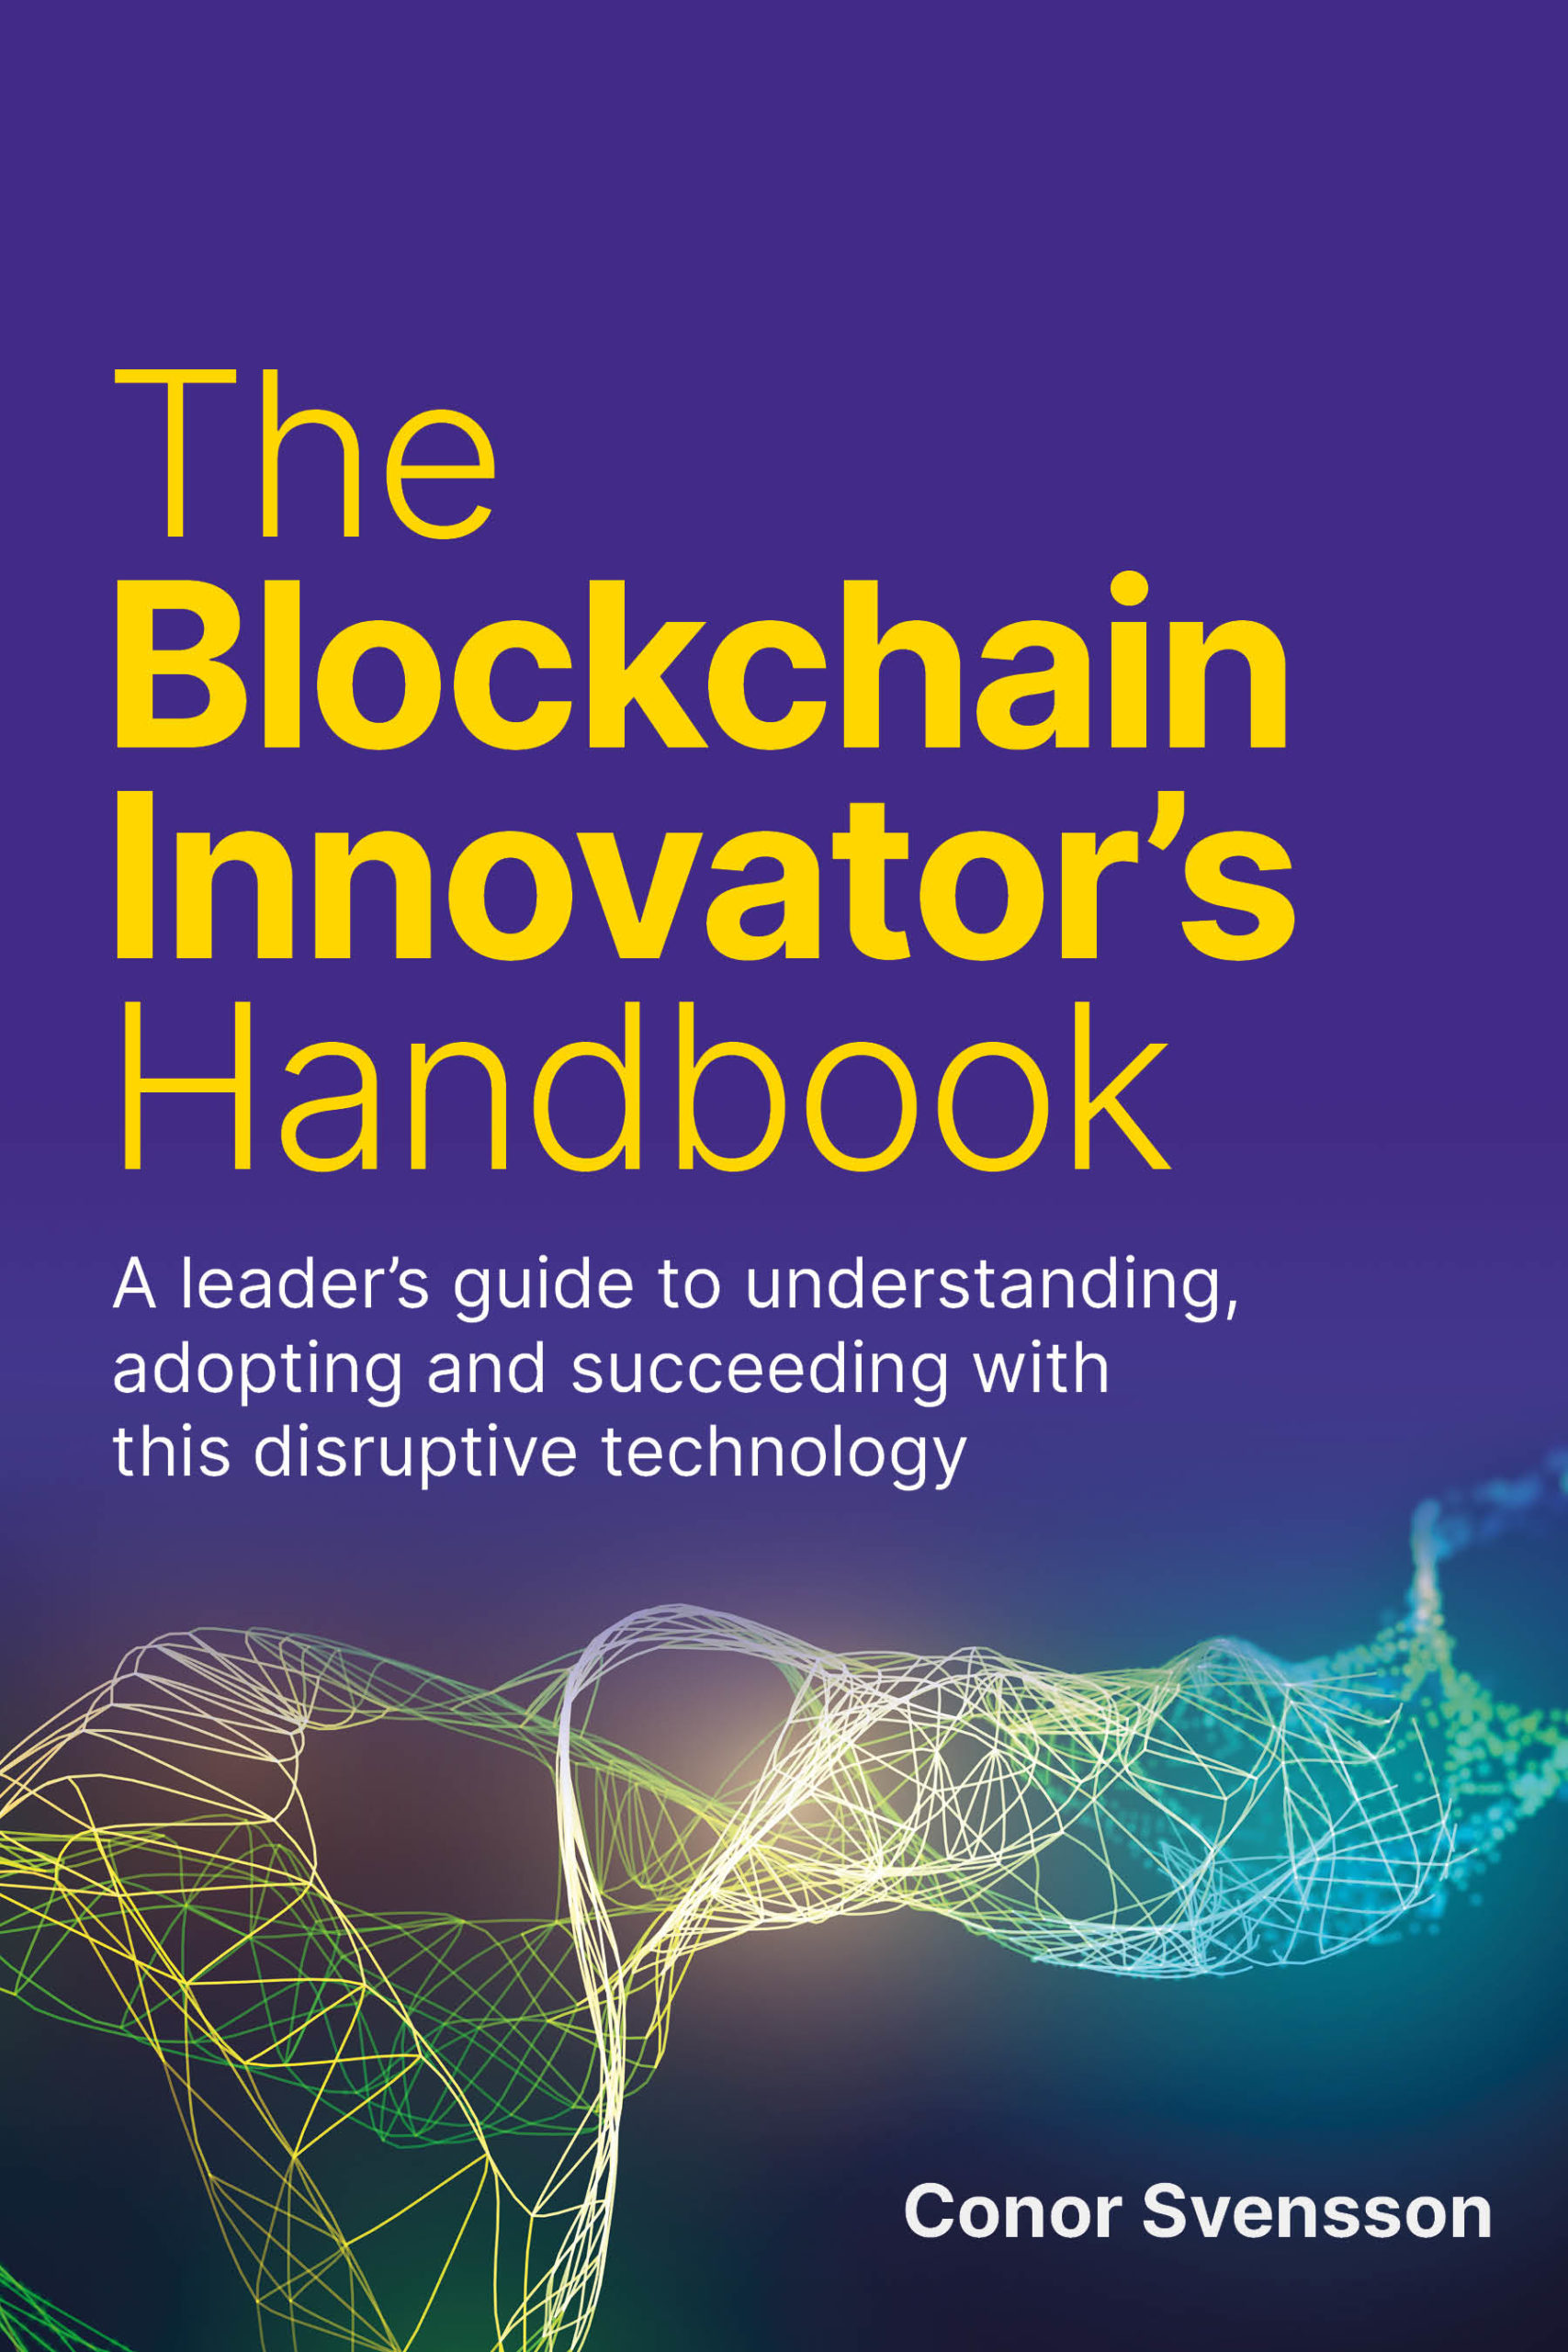 The Blockchain Innovator’s Handbook